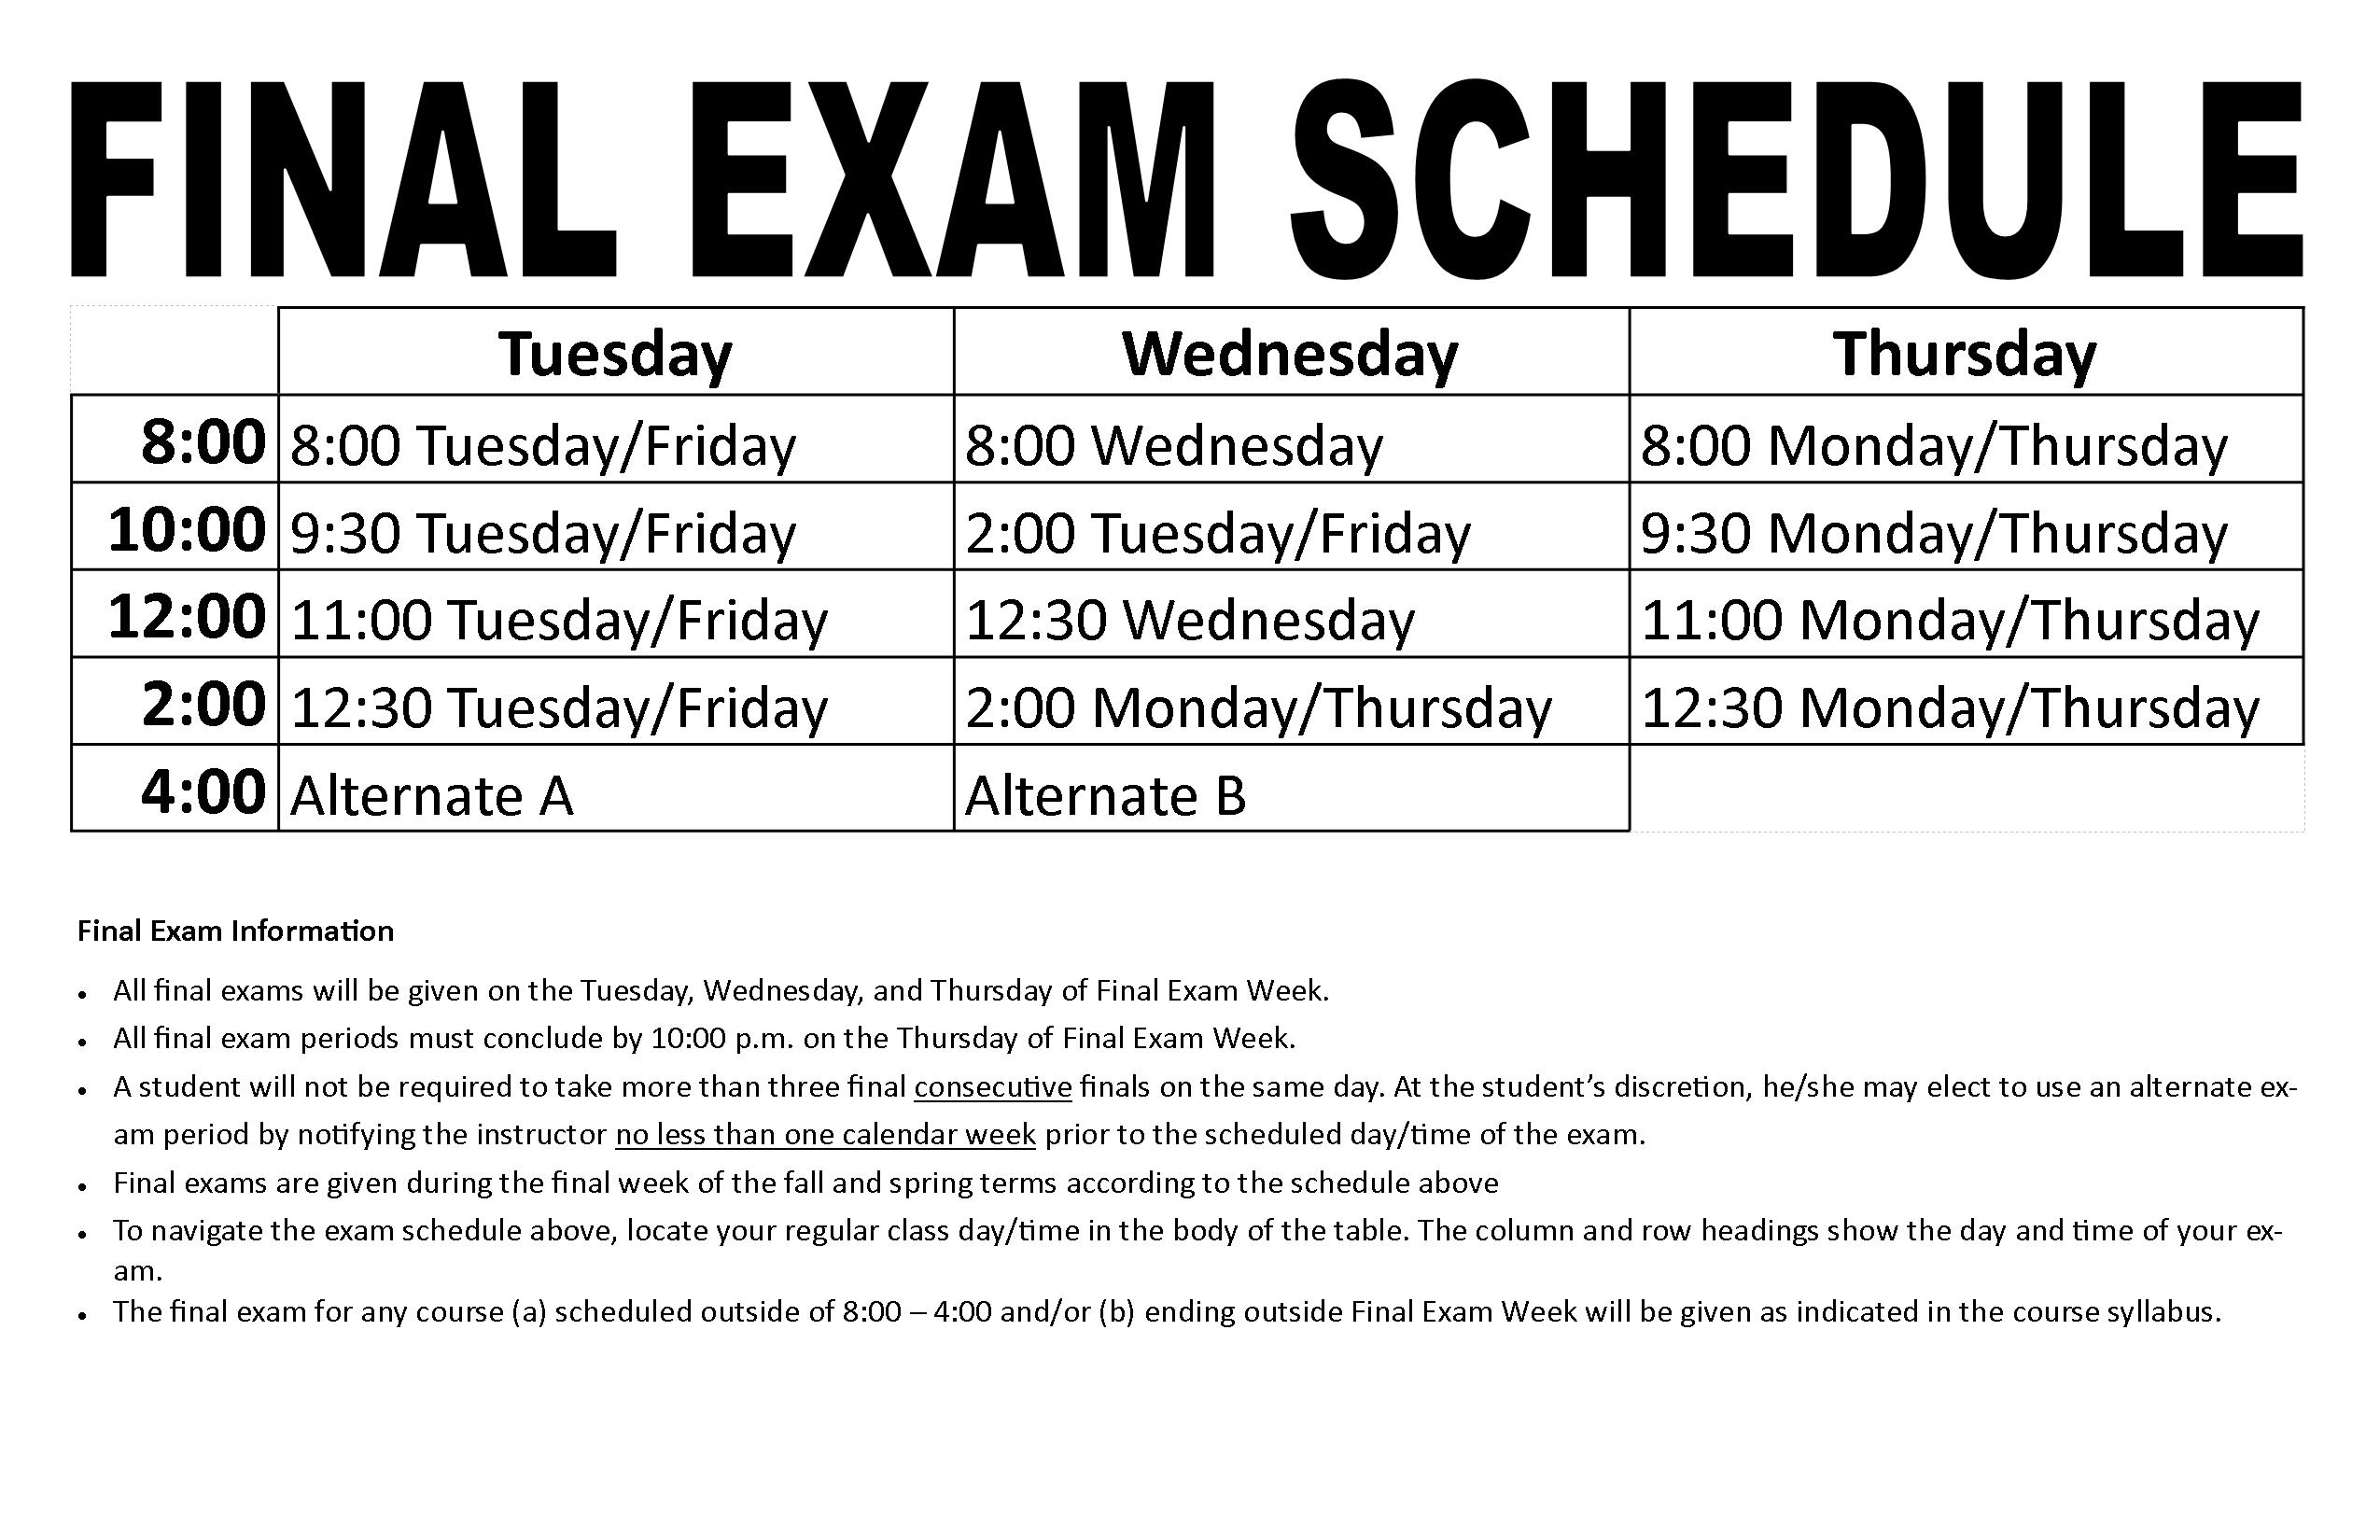 Final Exam Schedule POSTER 11x17 